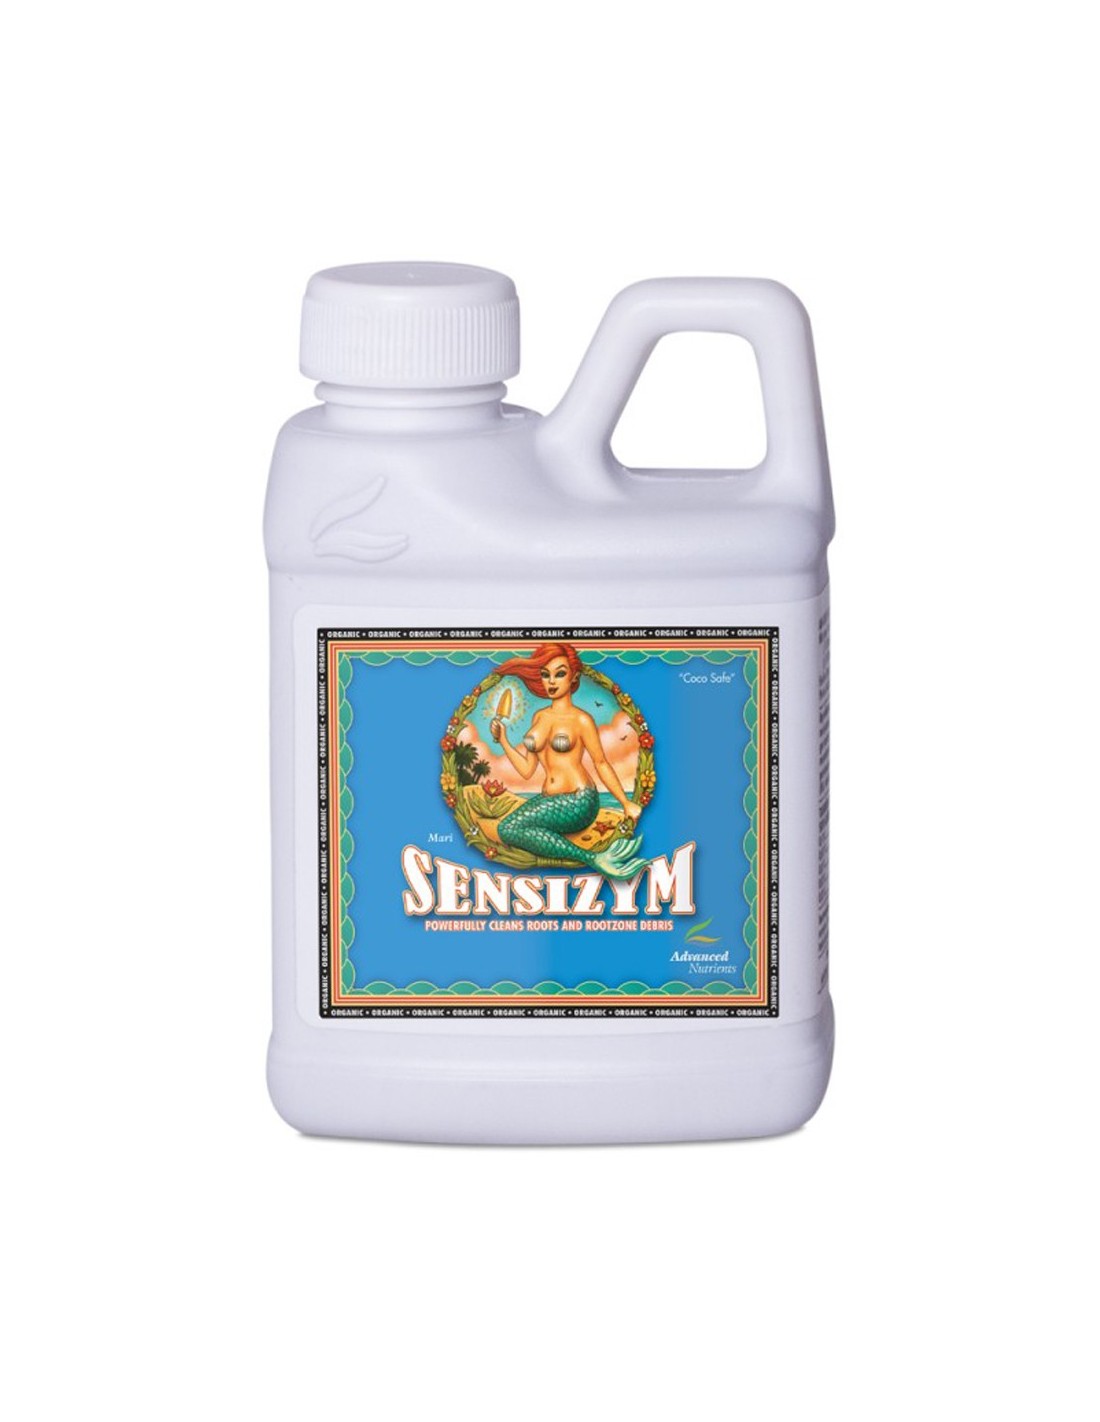 Sensizym 250ml Advanced Nutrients